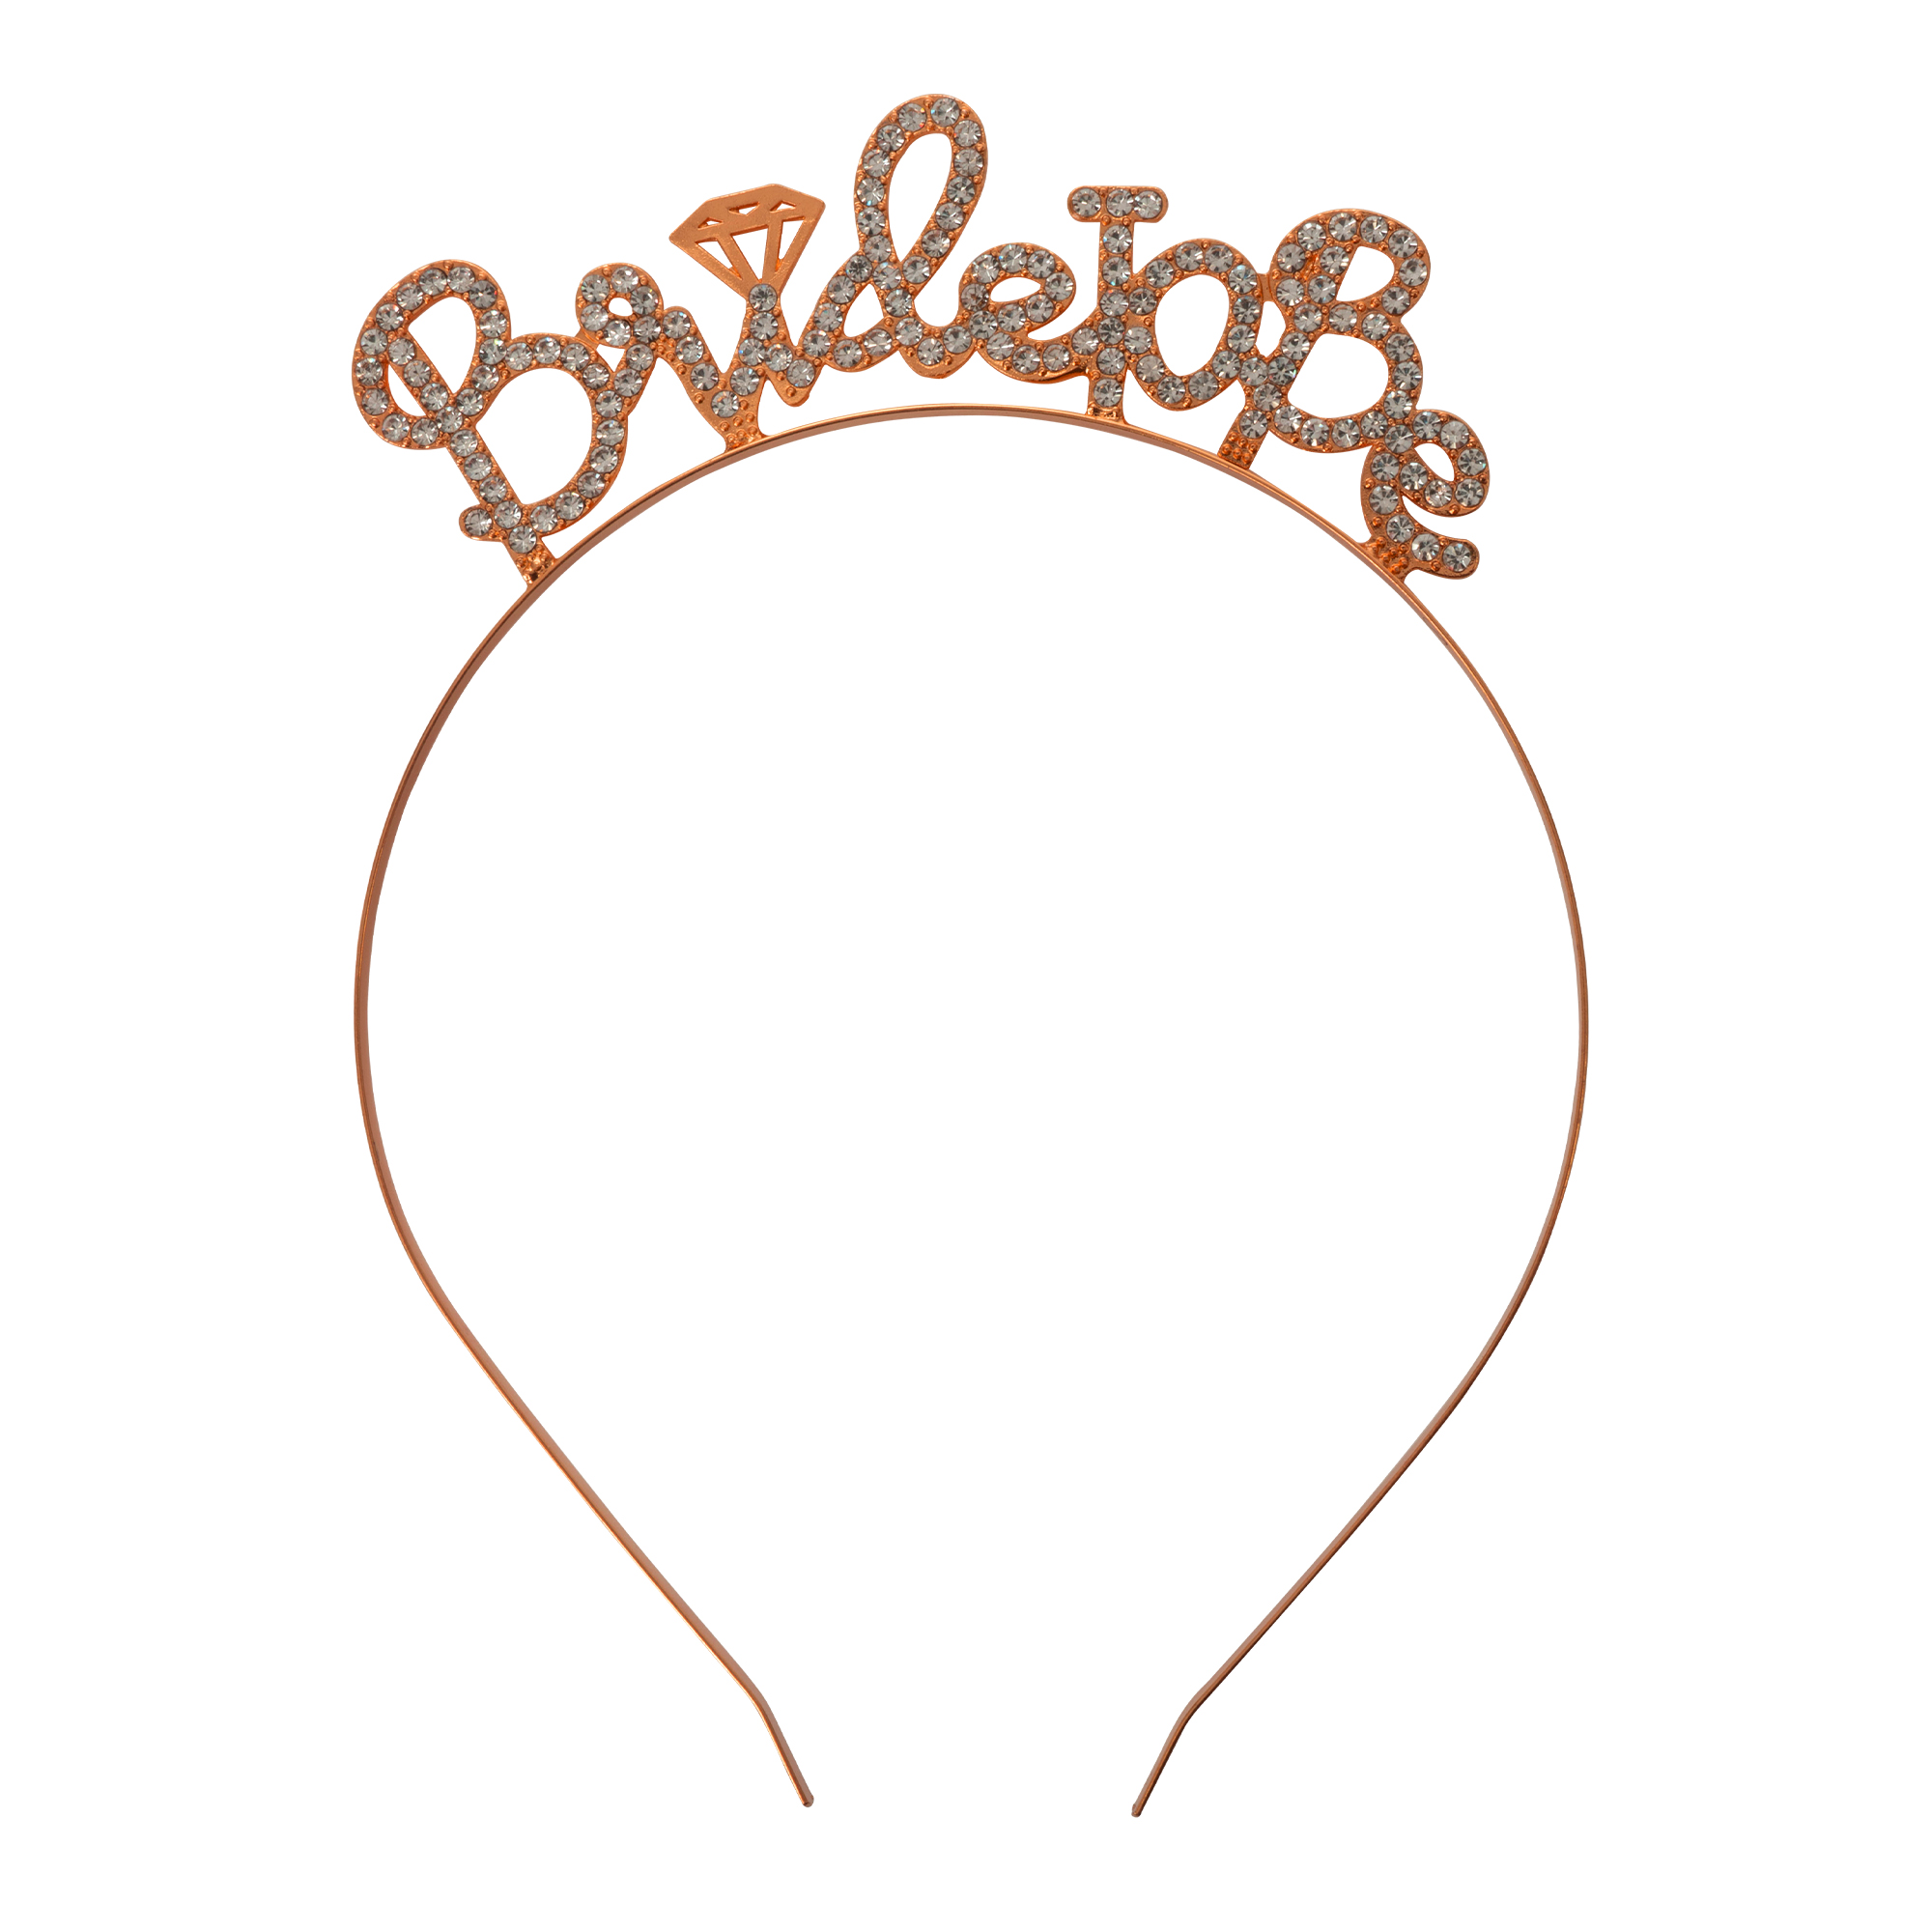 Headband "Bride to be" With Rhinestone 1¼" - Rose Gold